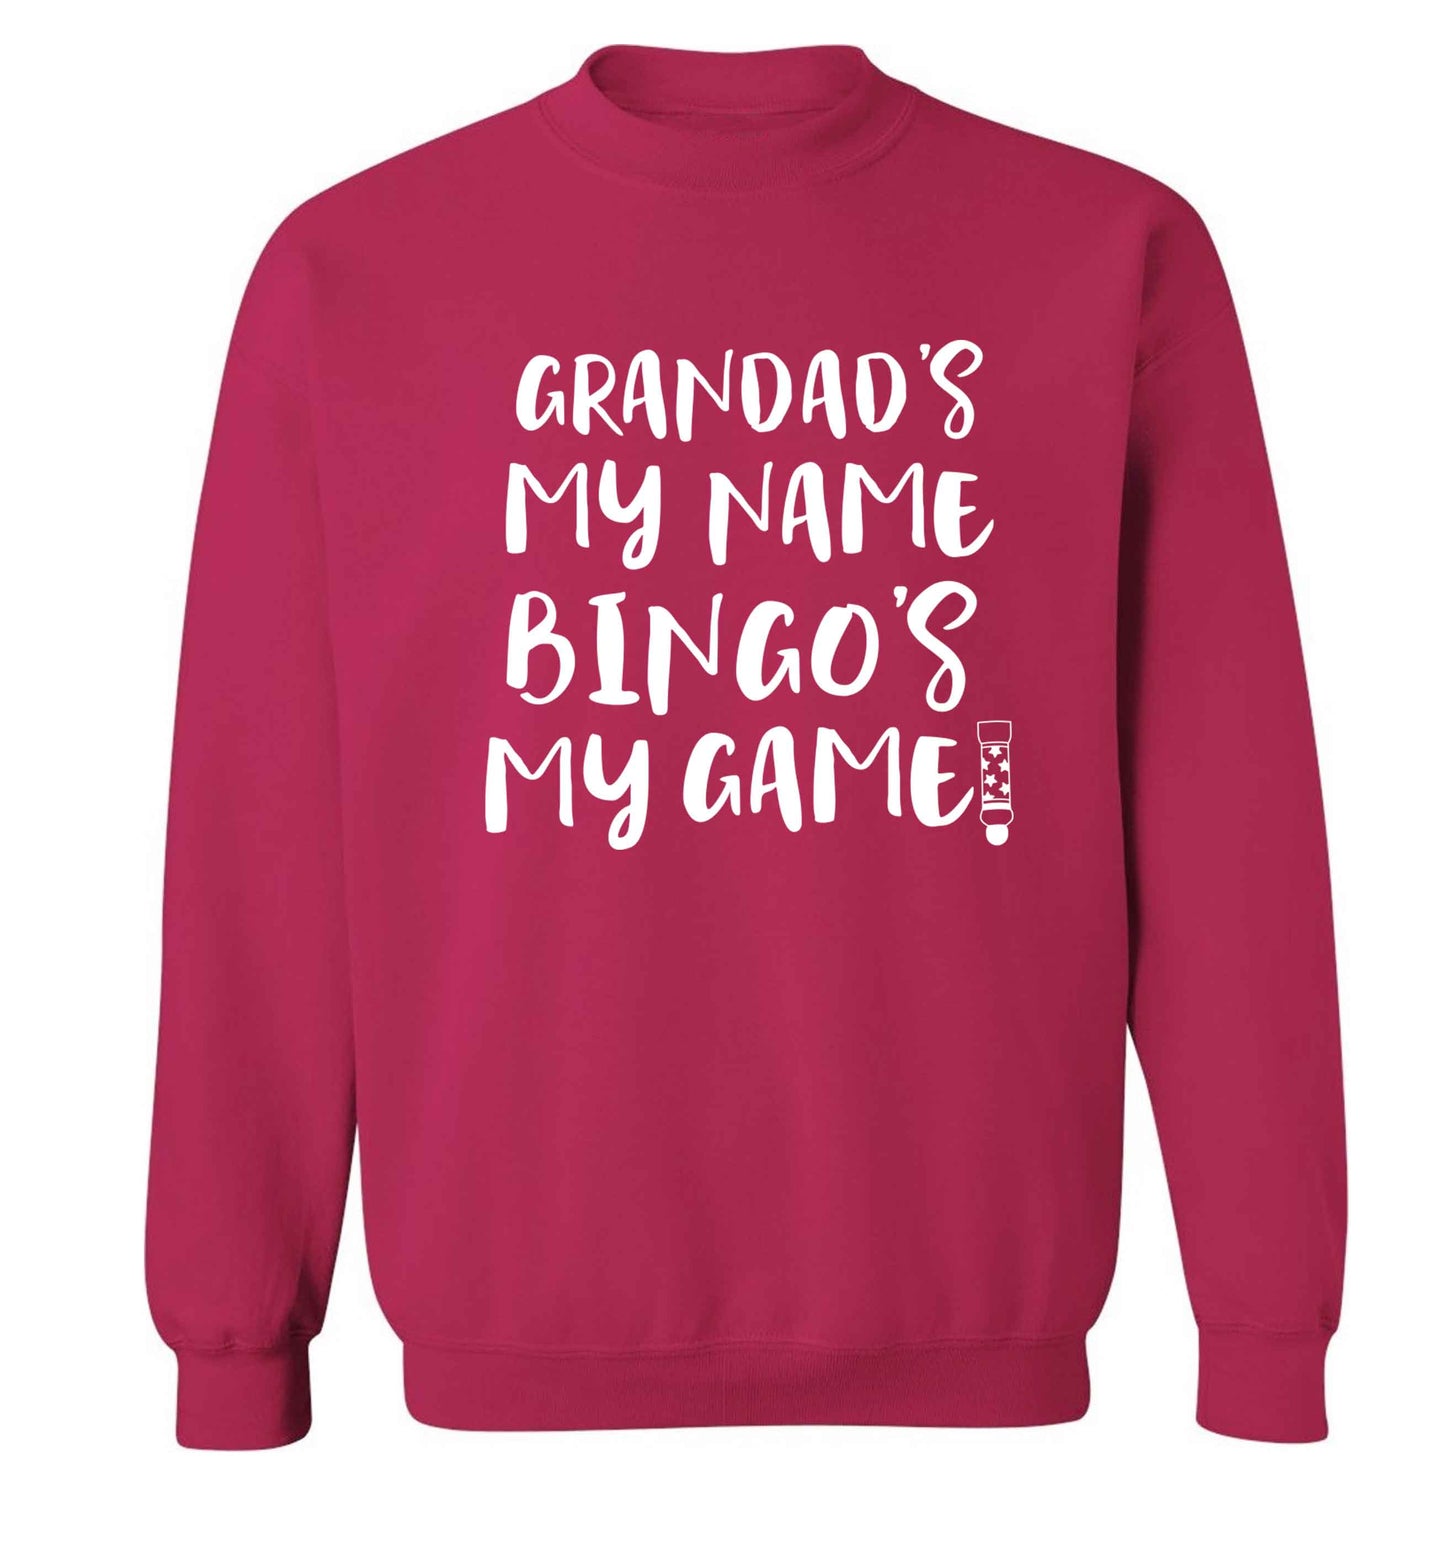 Grandad's my name bingo's my game! Adult's unisex pink Sweater 2XL